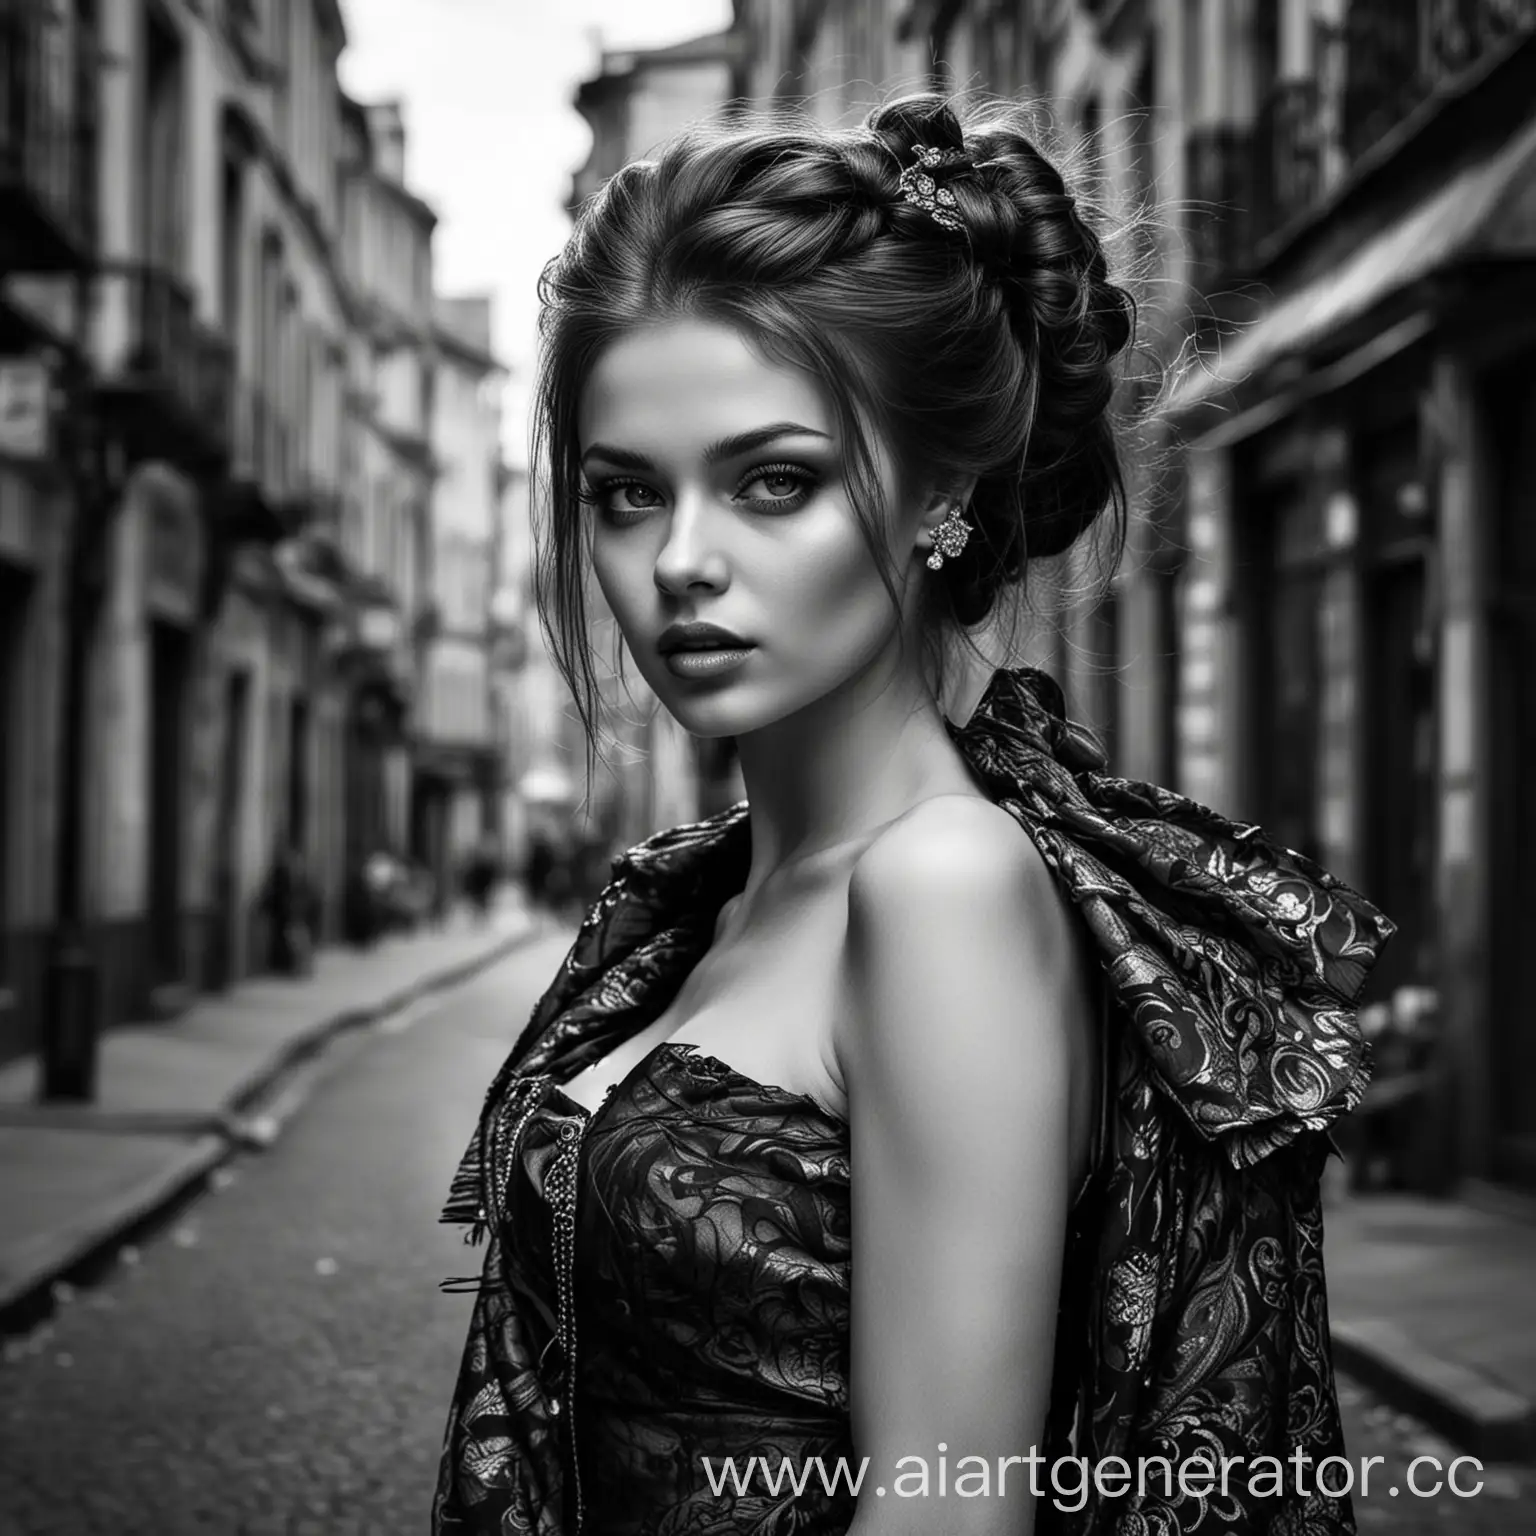 Extravagant-Girl-on-Street-Black-and-White-Background